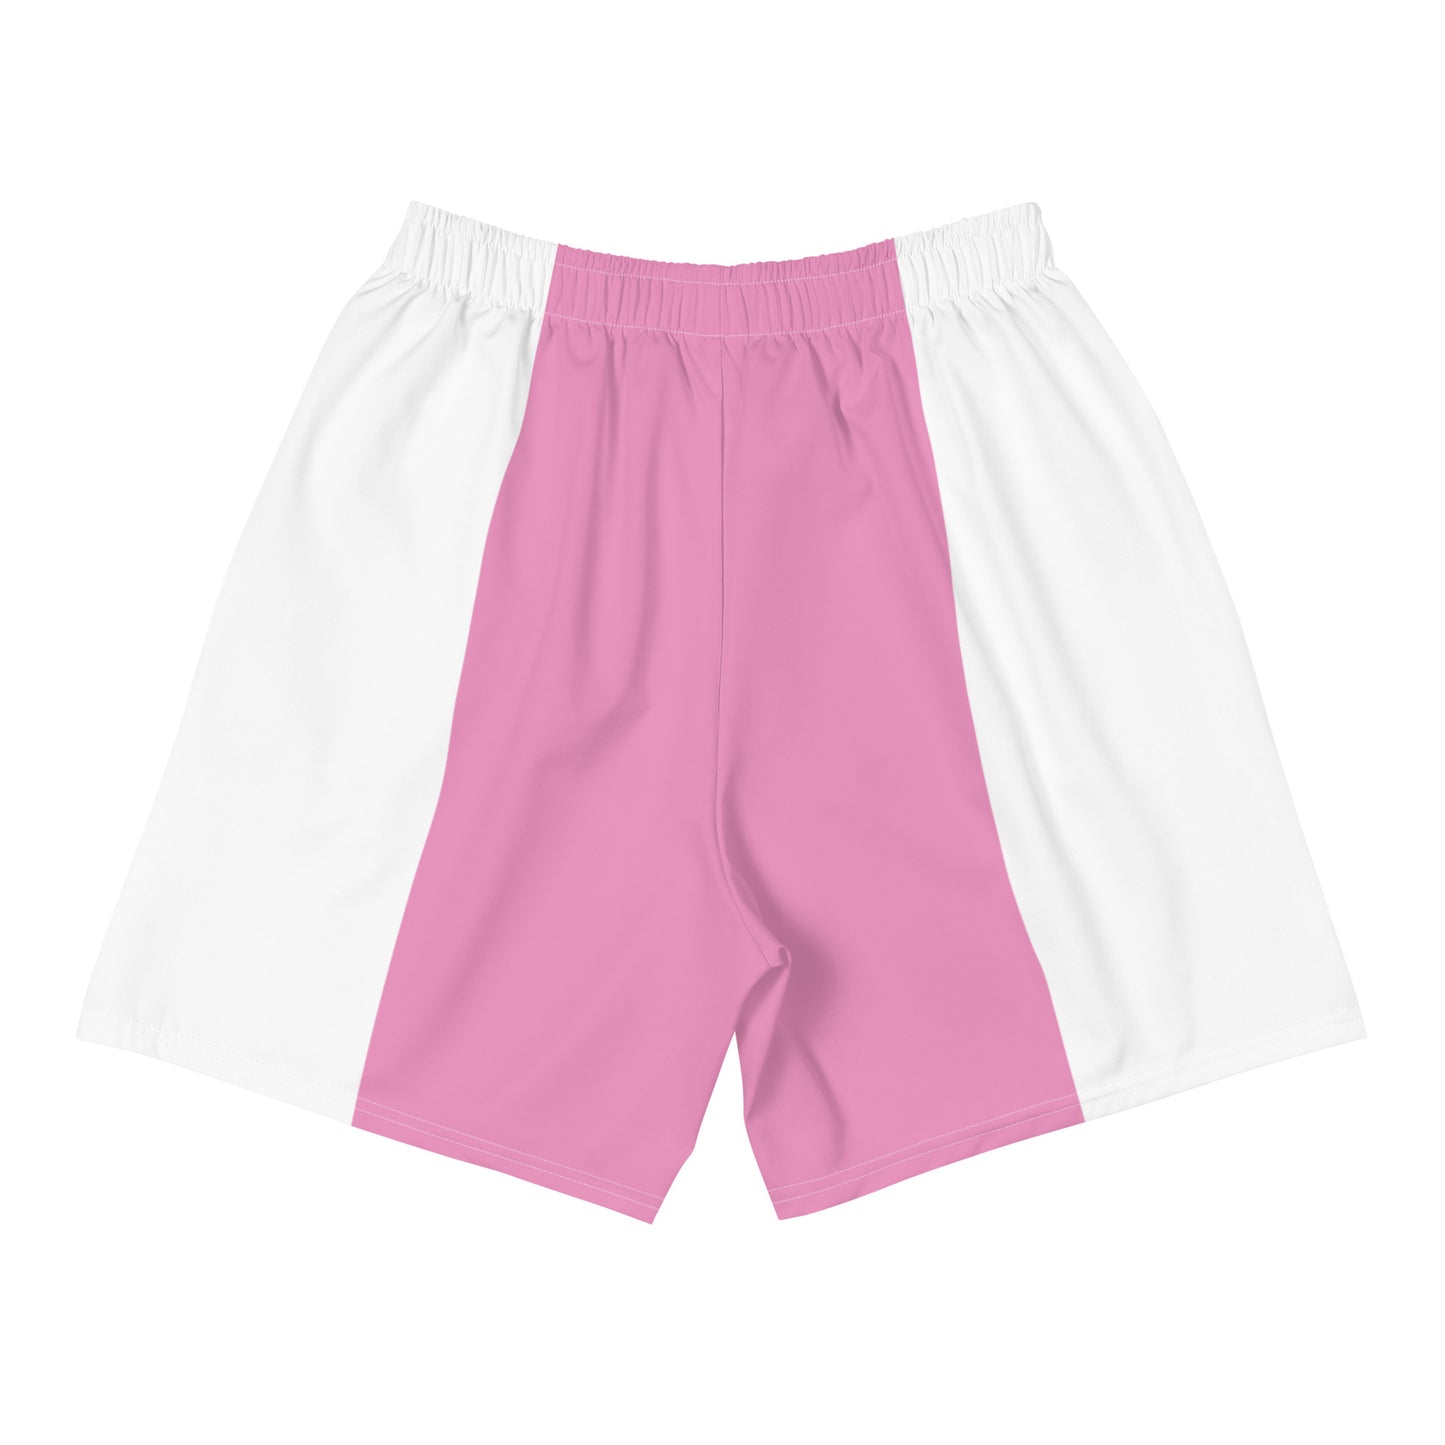 printed pink & white running shorts back